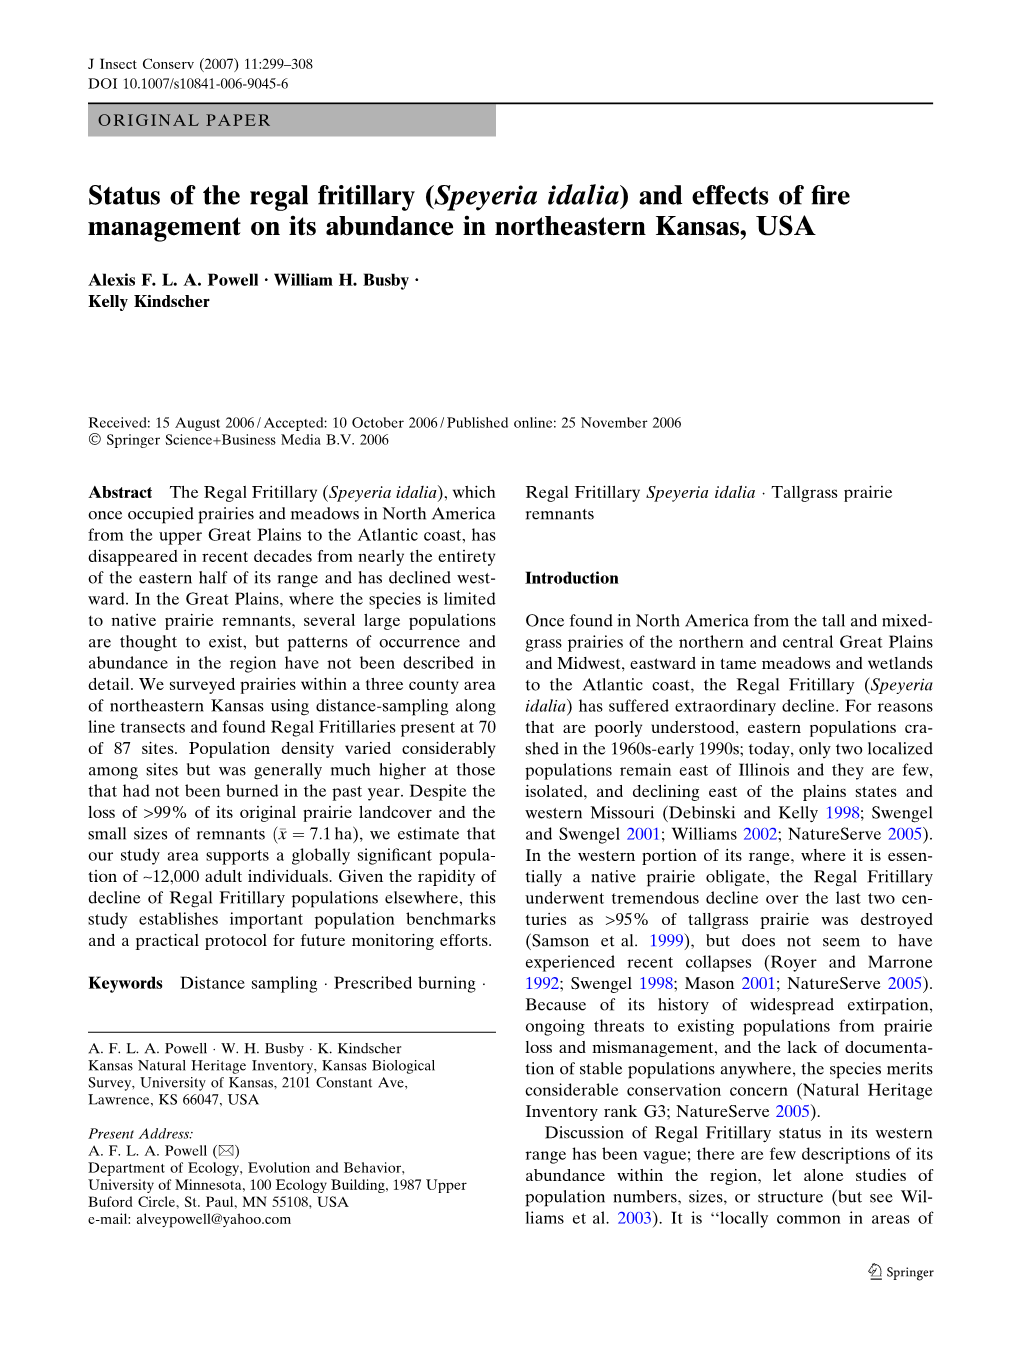 Status of the Regal Fritillary (Speyeria Idalia) and Effects of ﬁre Management on Its Abundance in Northeastern Kansas, USA